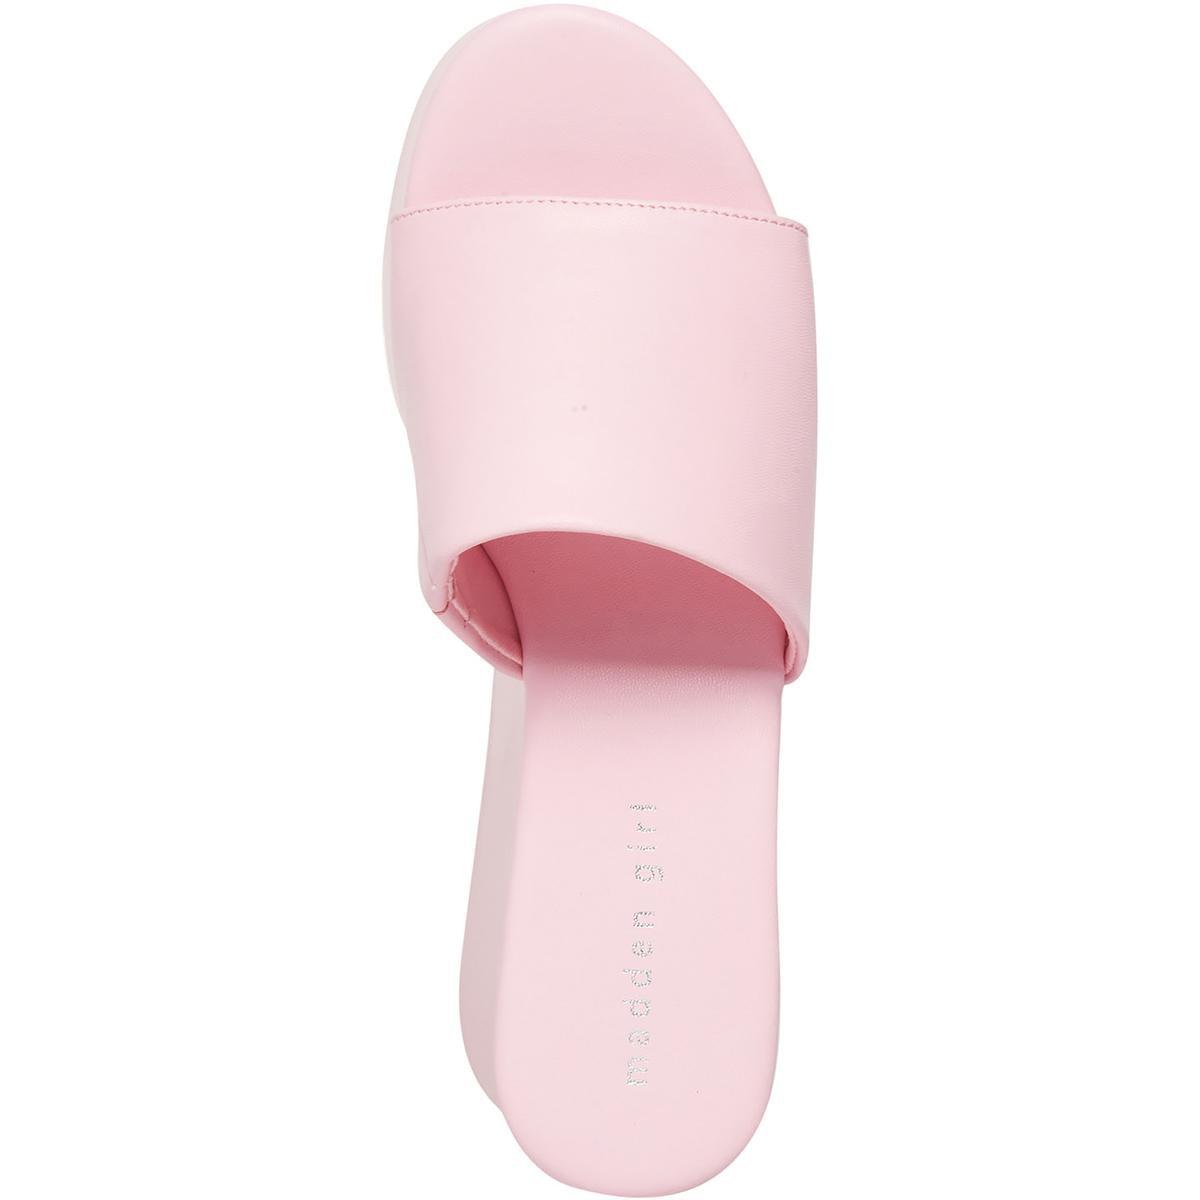 Madden Girl Cake Slip On Dressy Platform Sandals in Pink | Lyst